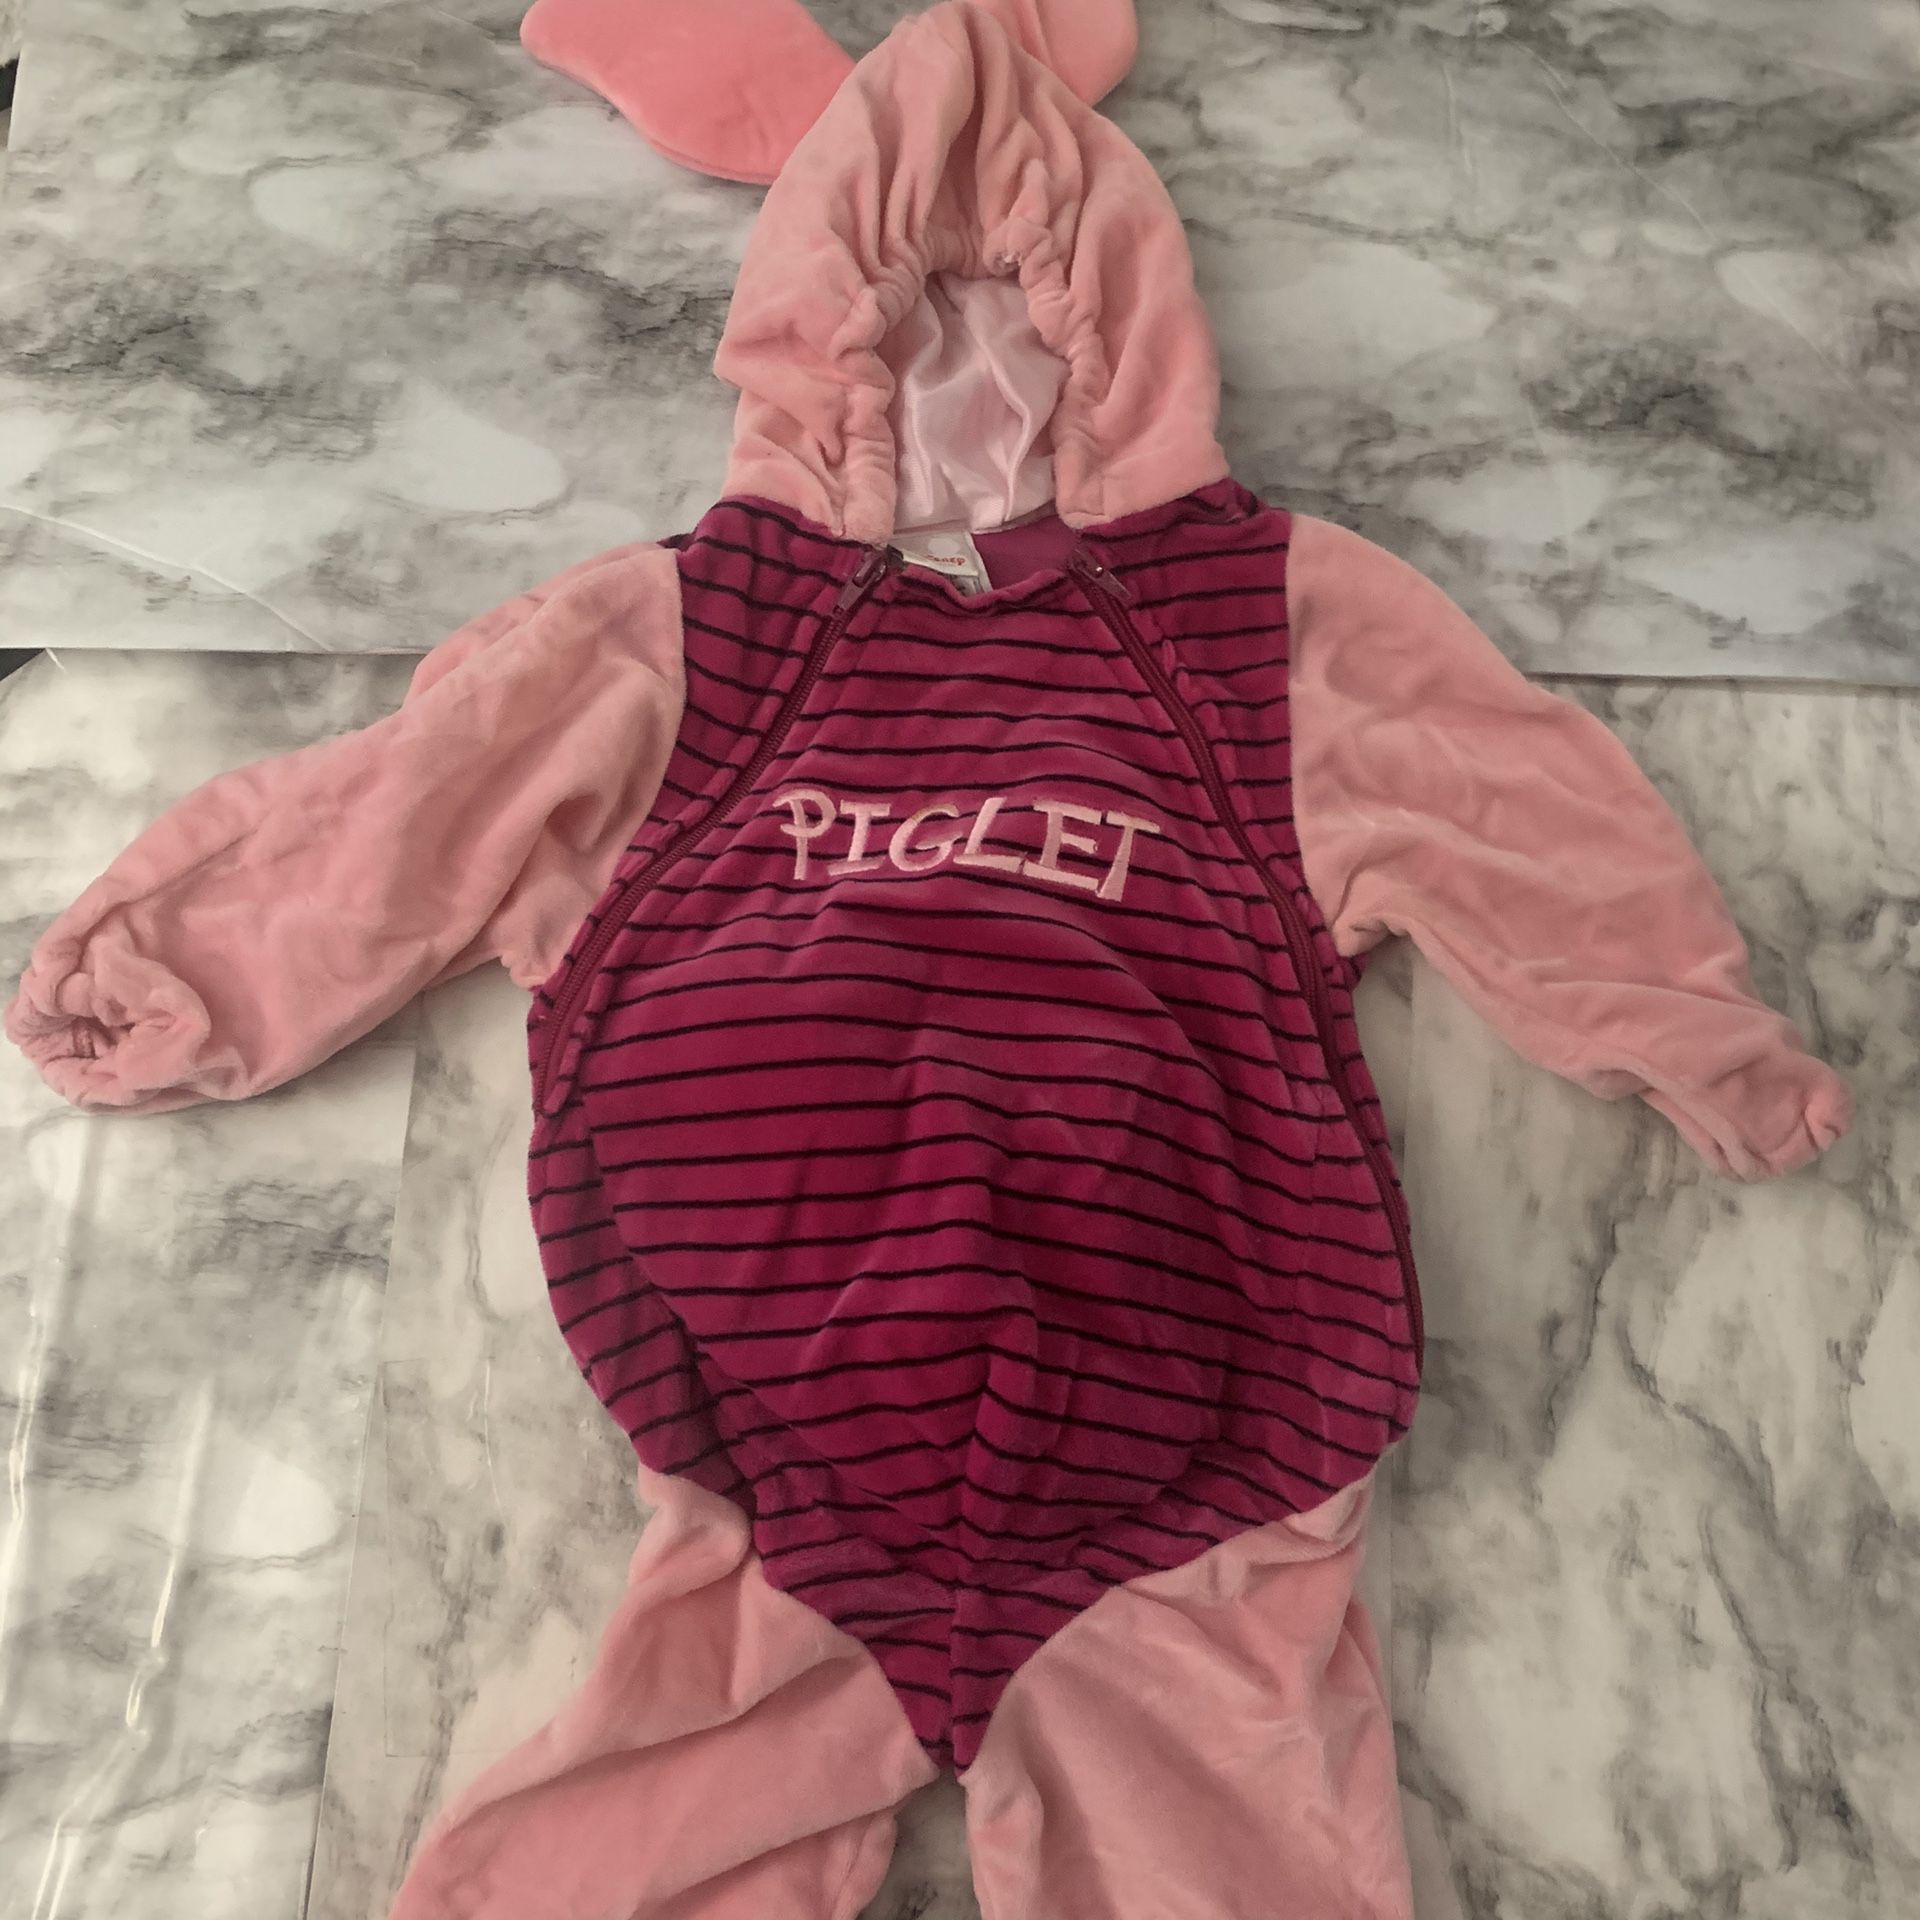 Disney store Piglet costume 6-12 months